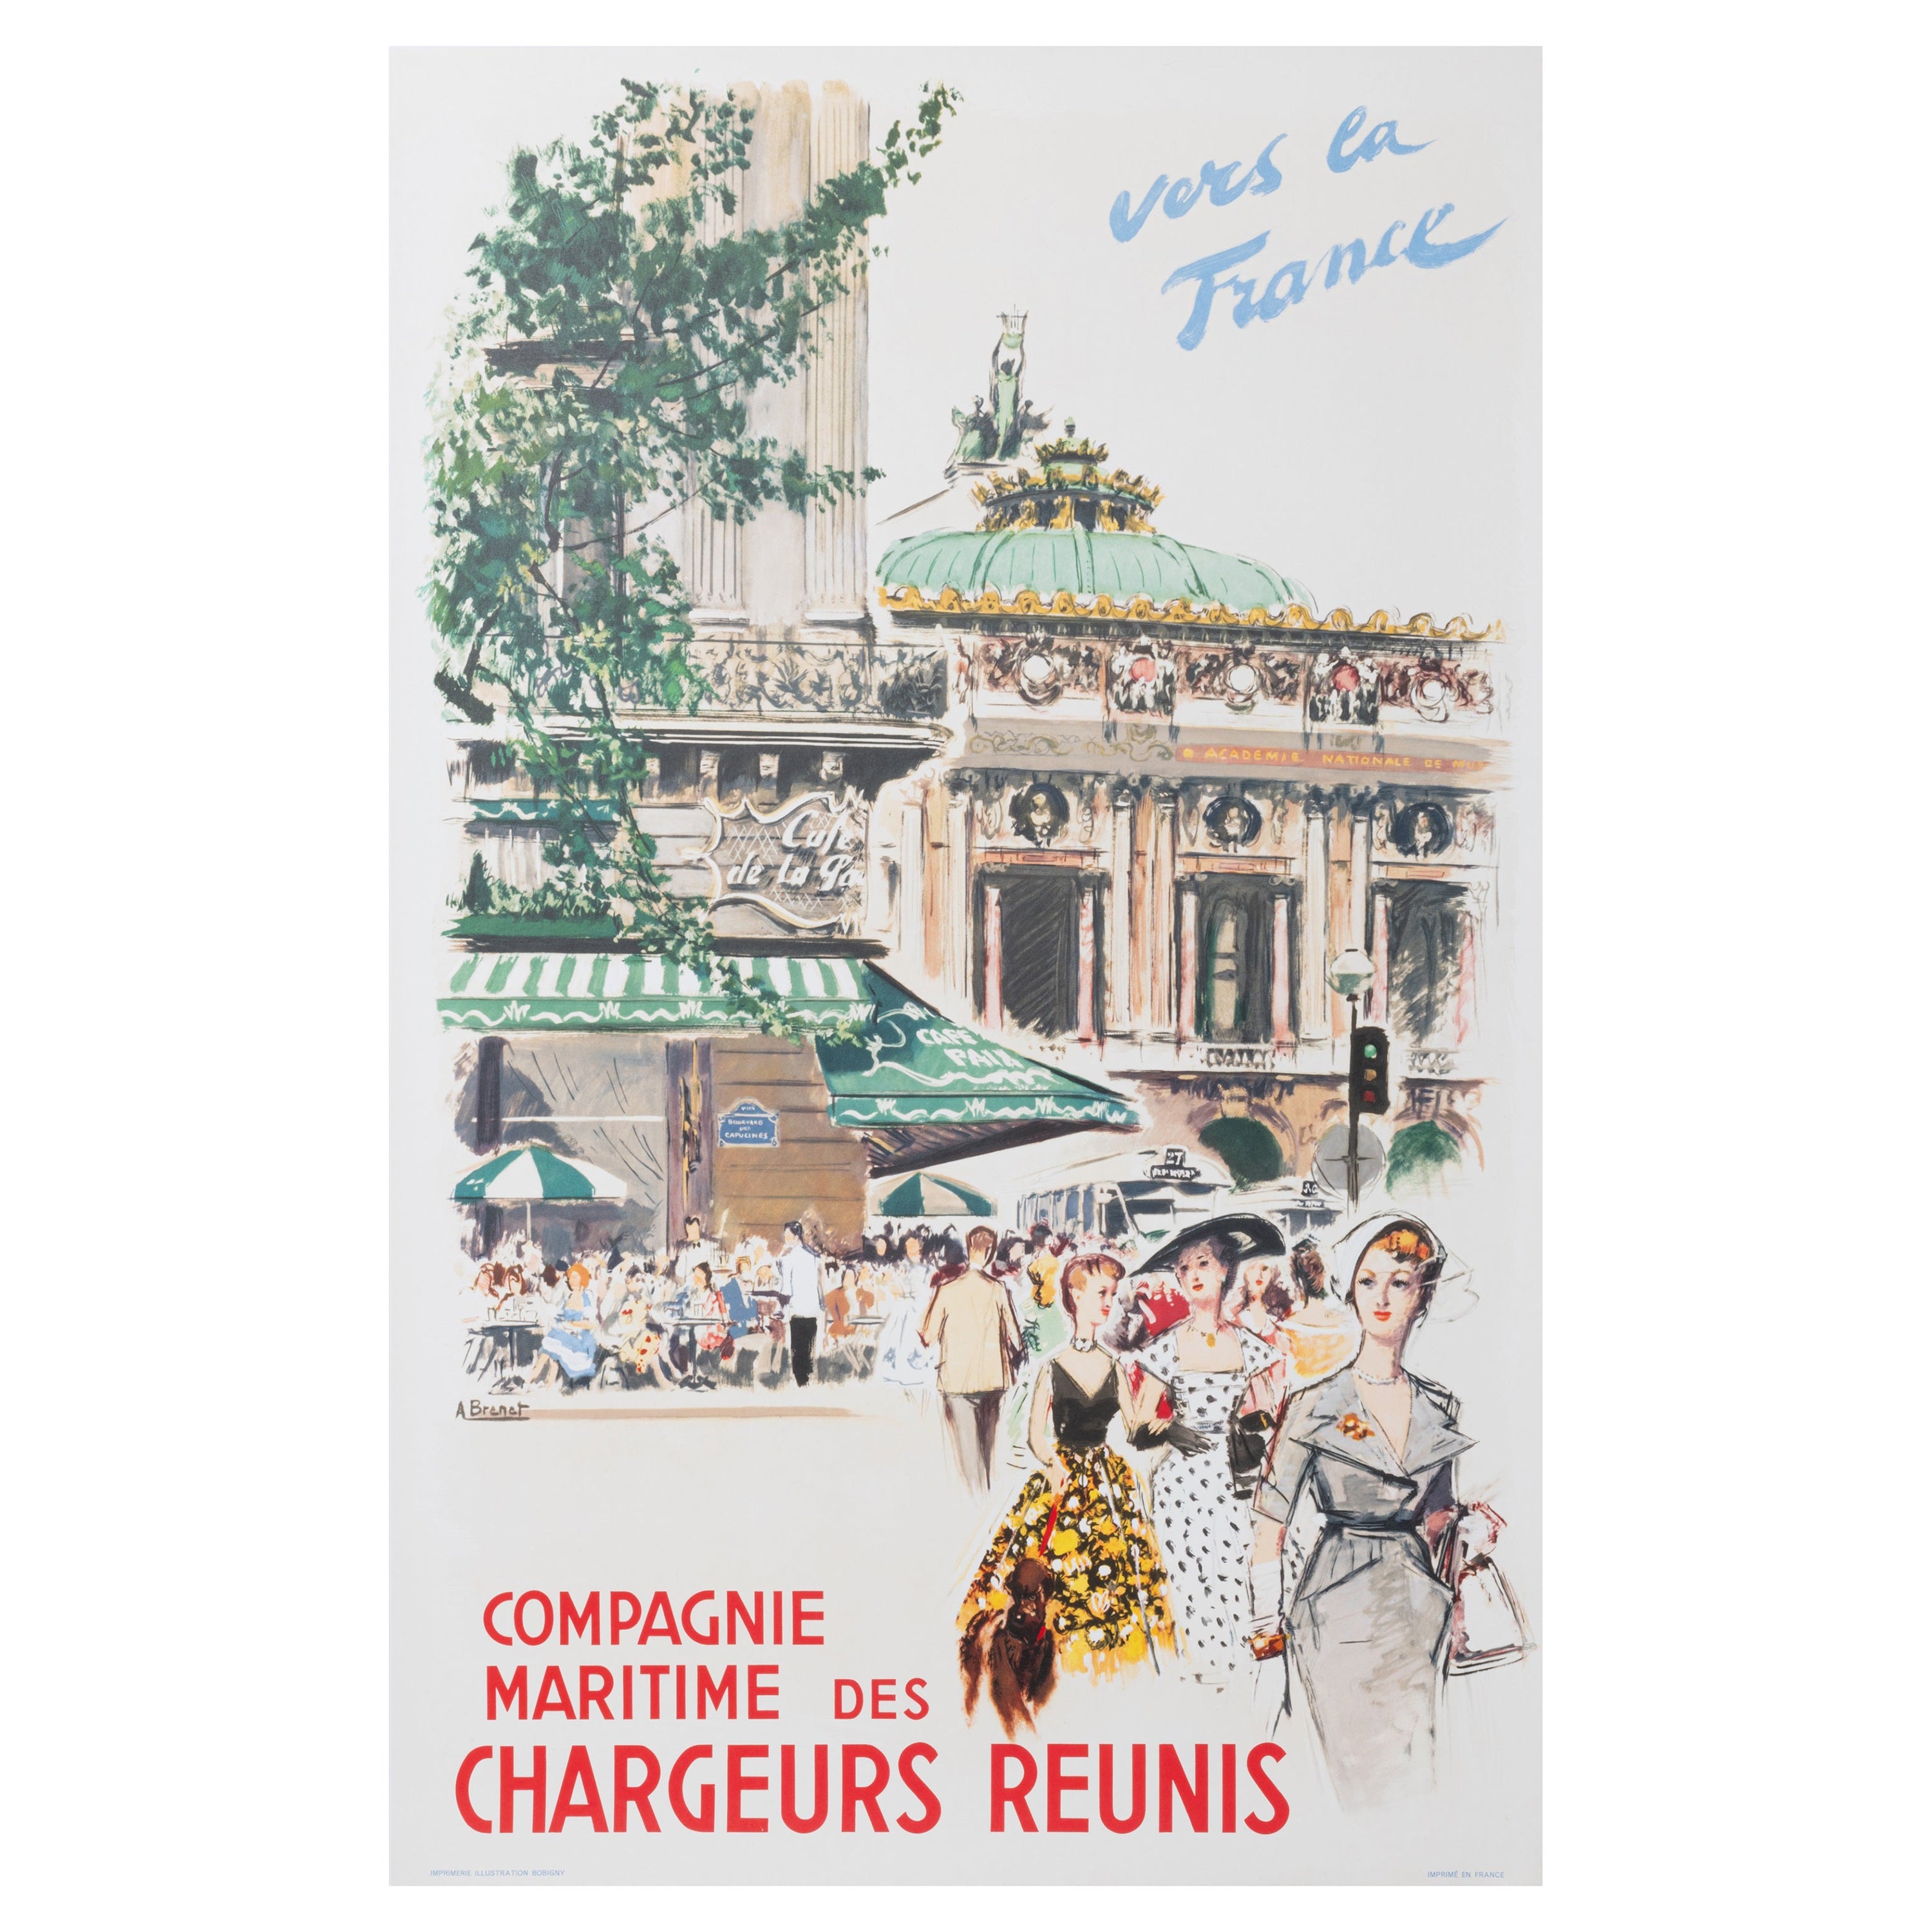 Brenet, Original Boat Poster, Paris Cafe Paix Opera Garnier, Chargeur Reuni 1950